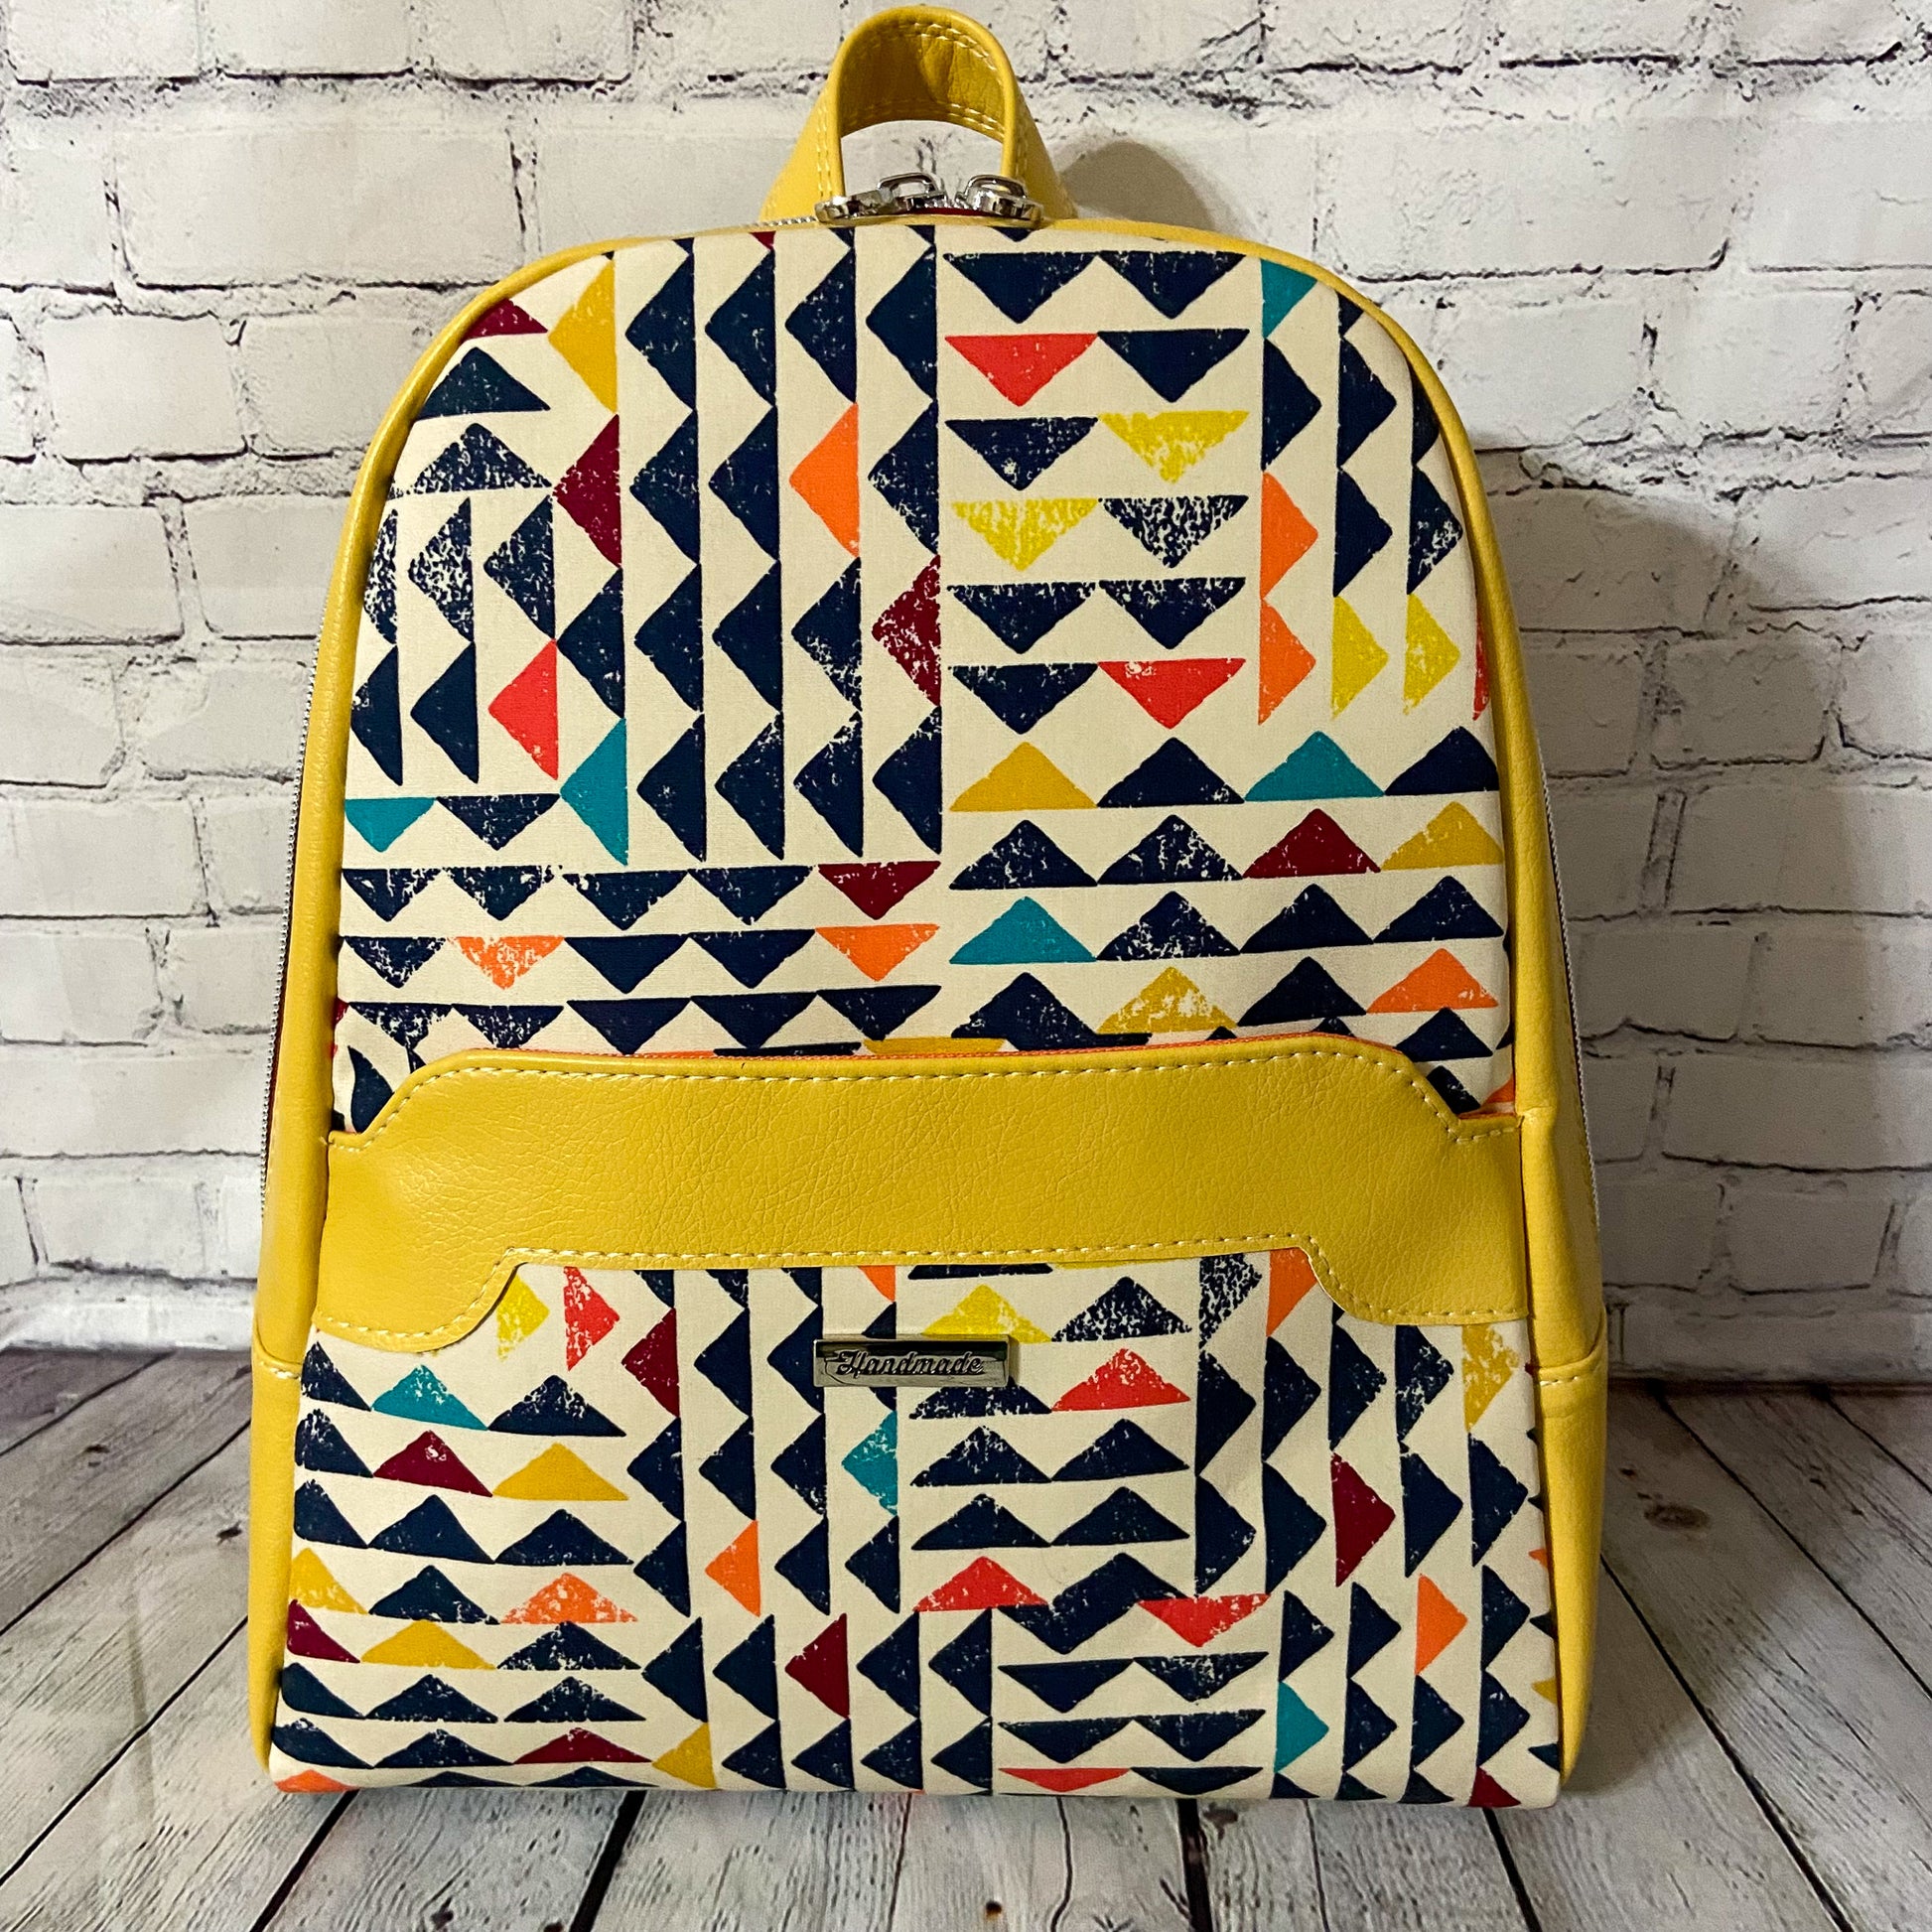 Shaw Backpack Purse Pattern